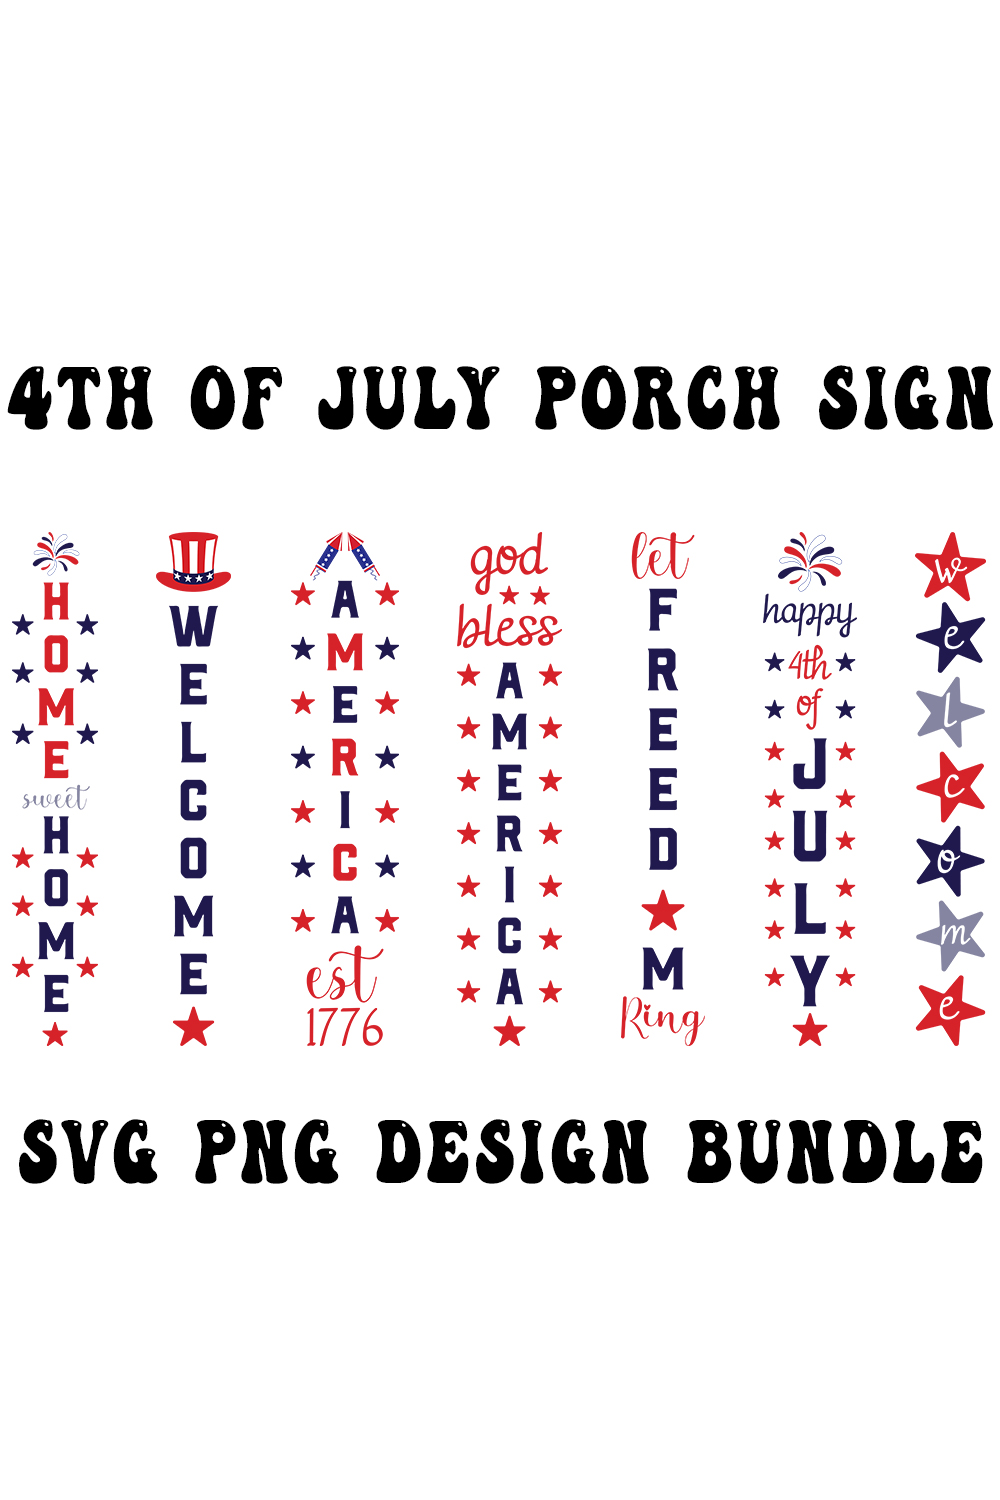 4th of July Porch Sign SVG Bundle pinterest preview image.